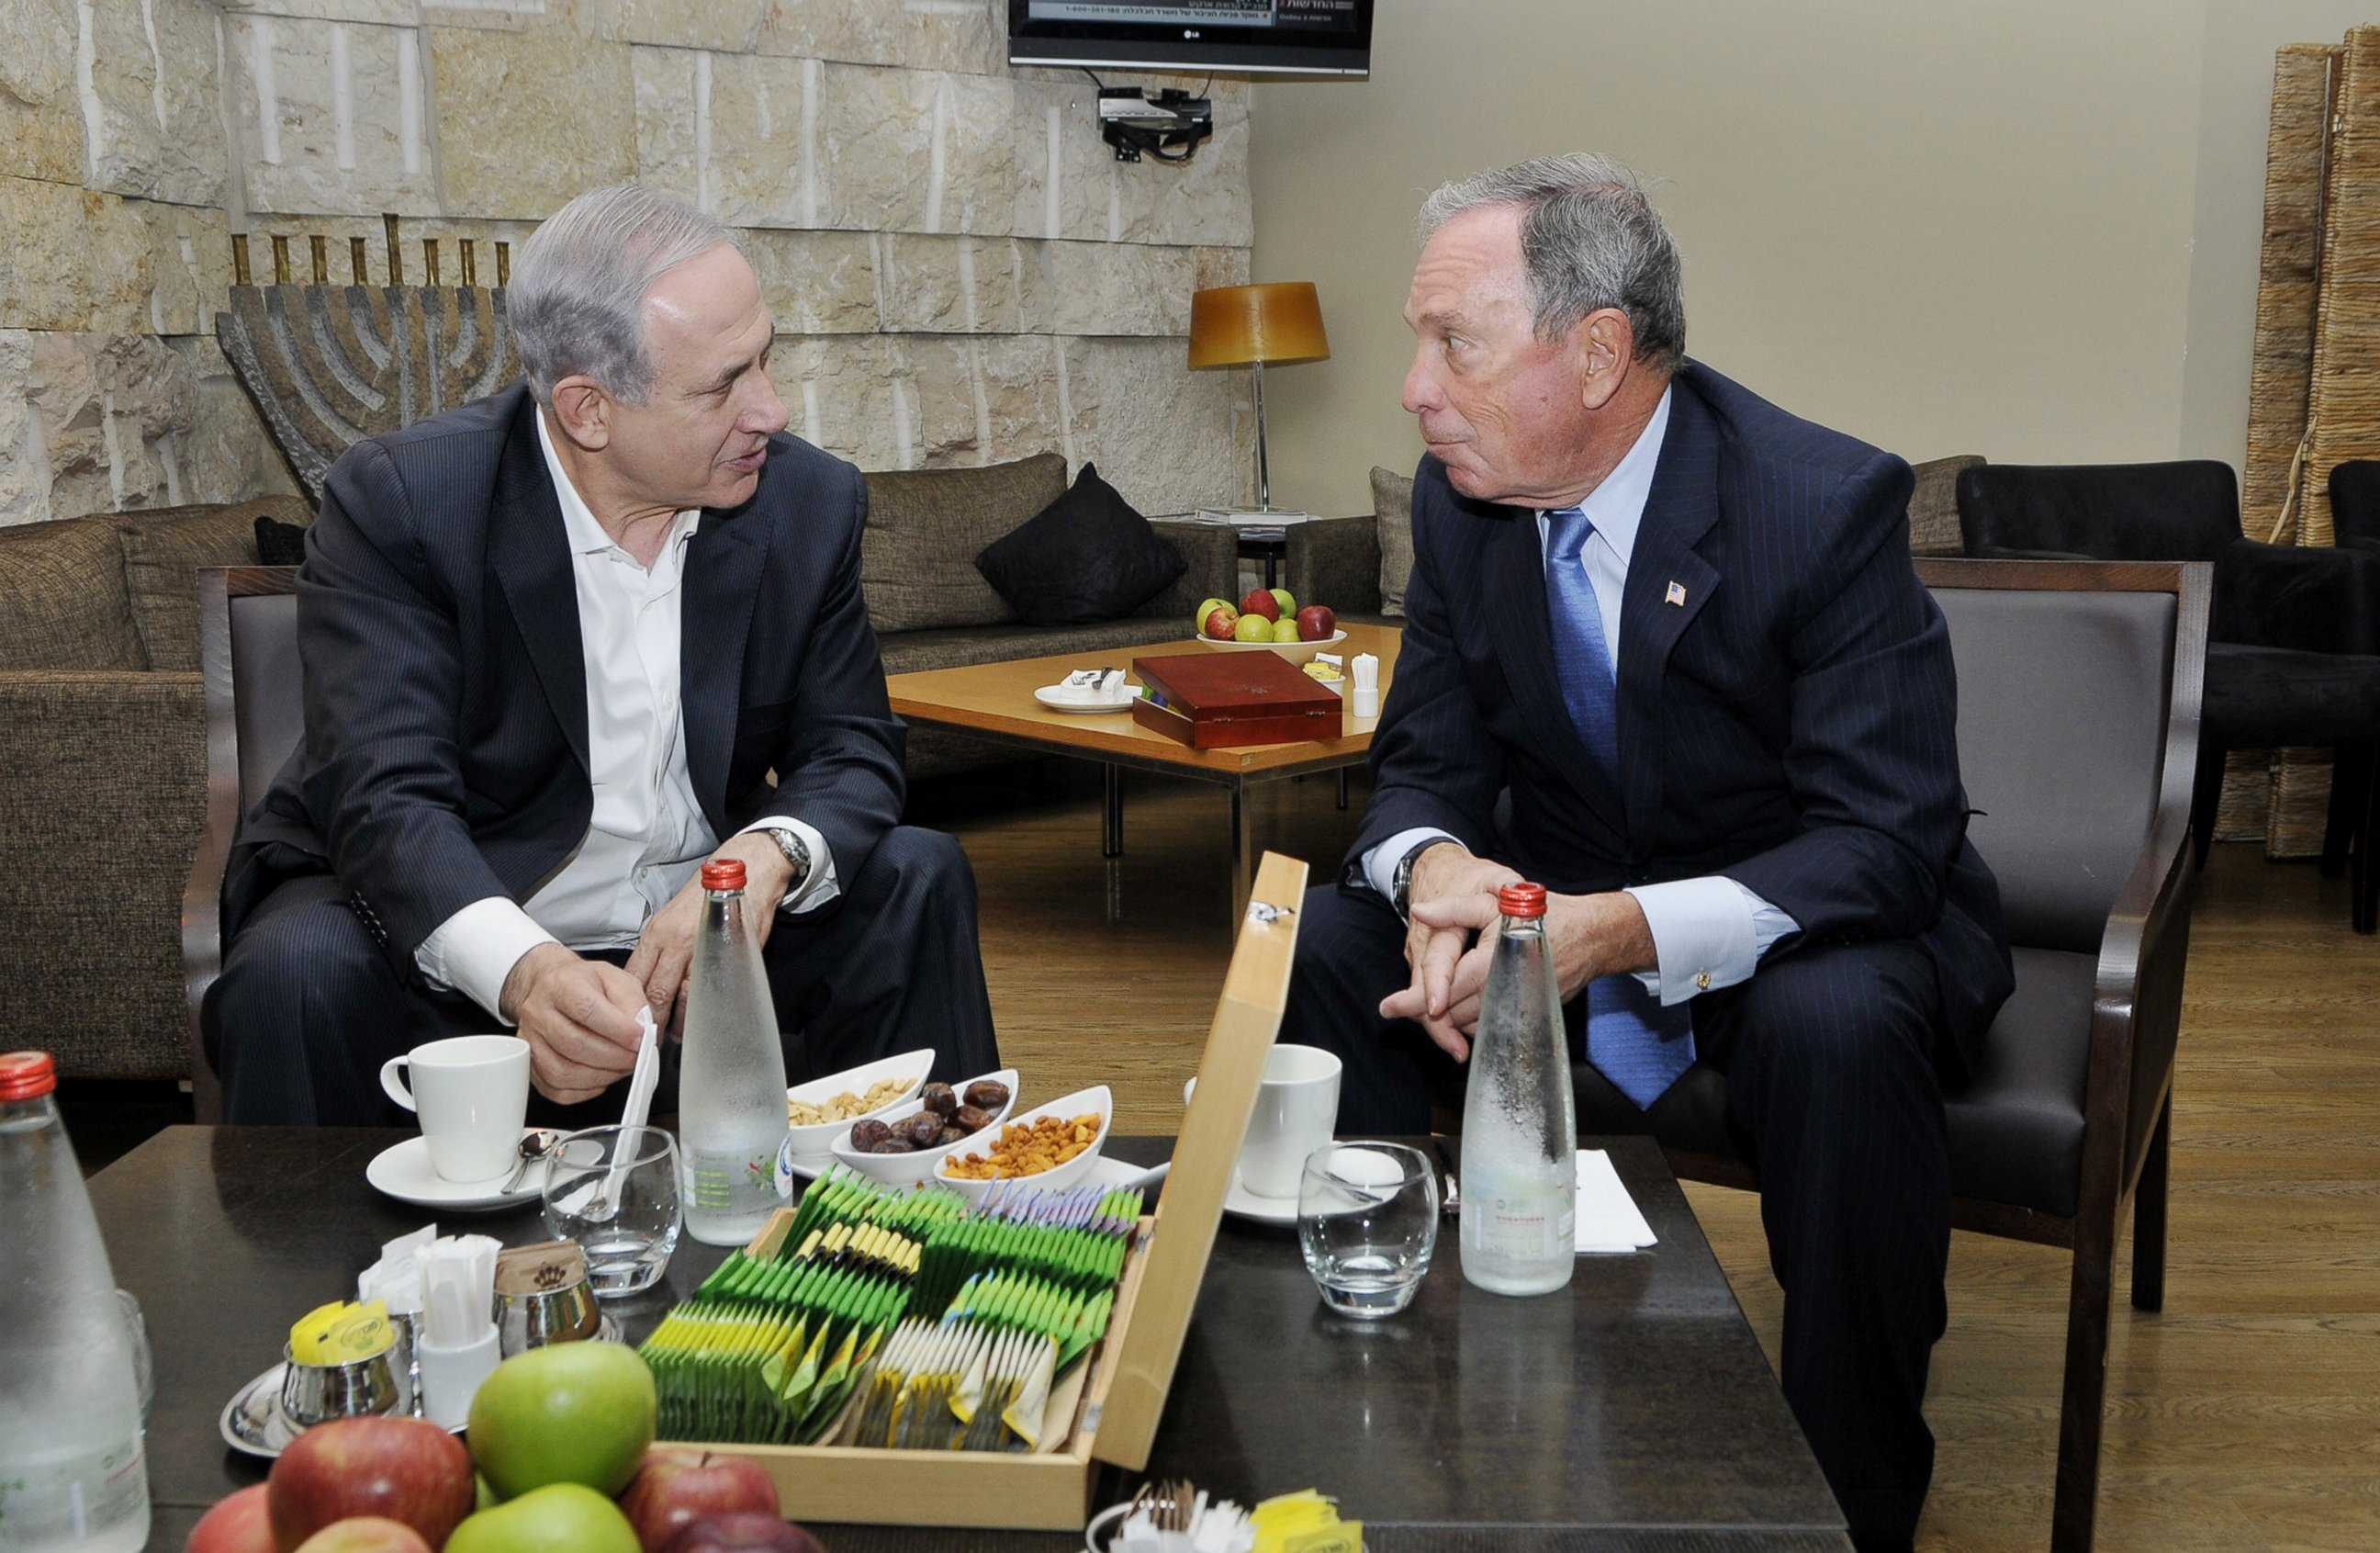 PHOTO: Israel's prime minister, Benjamin Netanyahu, speaks with Michael Bloomberg at Ben Gurion International Airport near Tel Aviv, Israel on July 23, 2014.